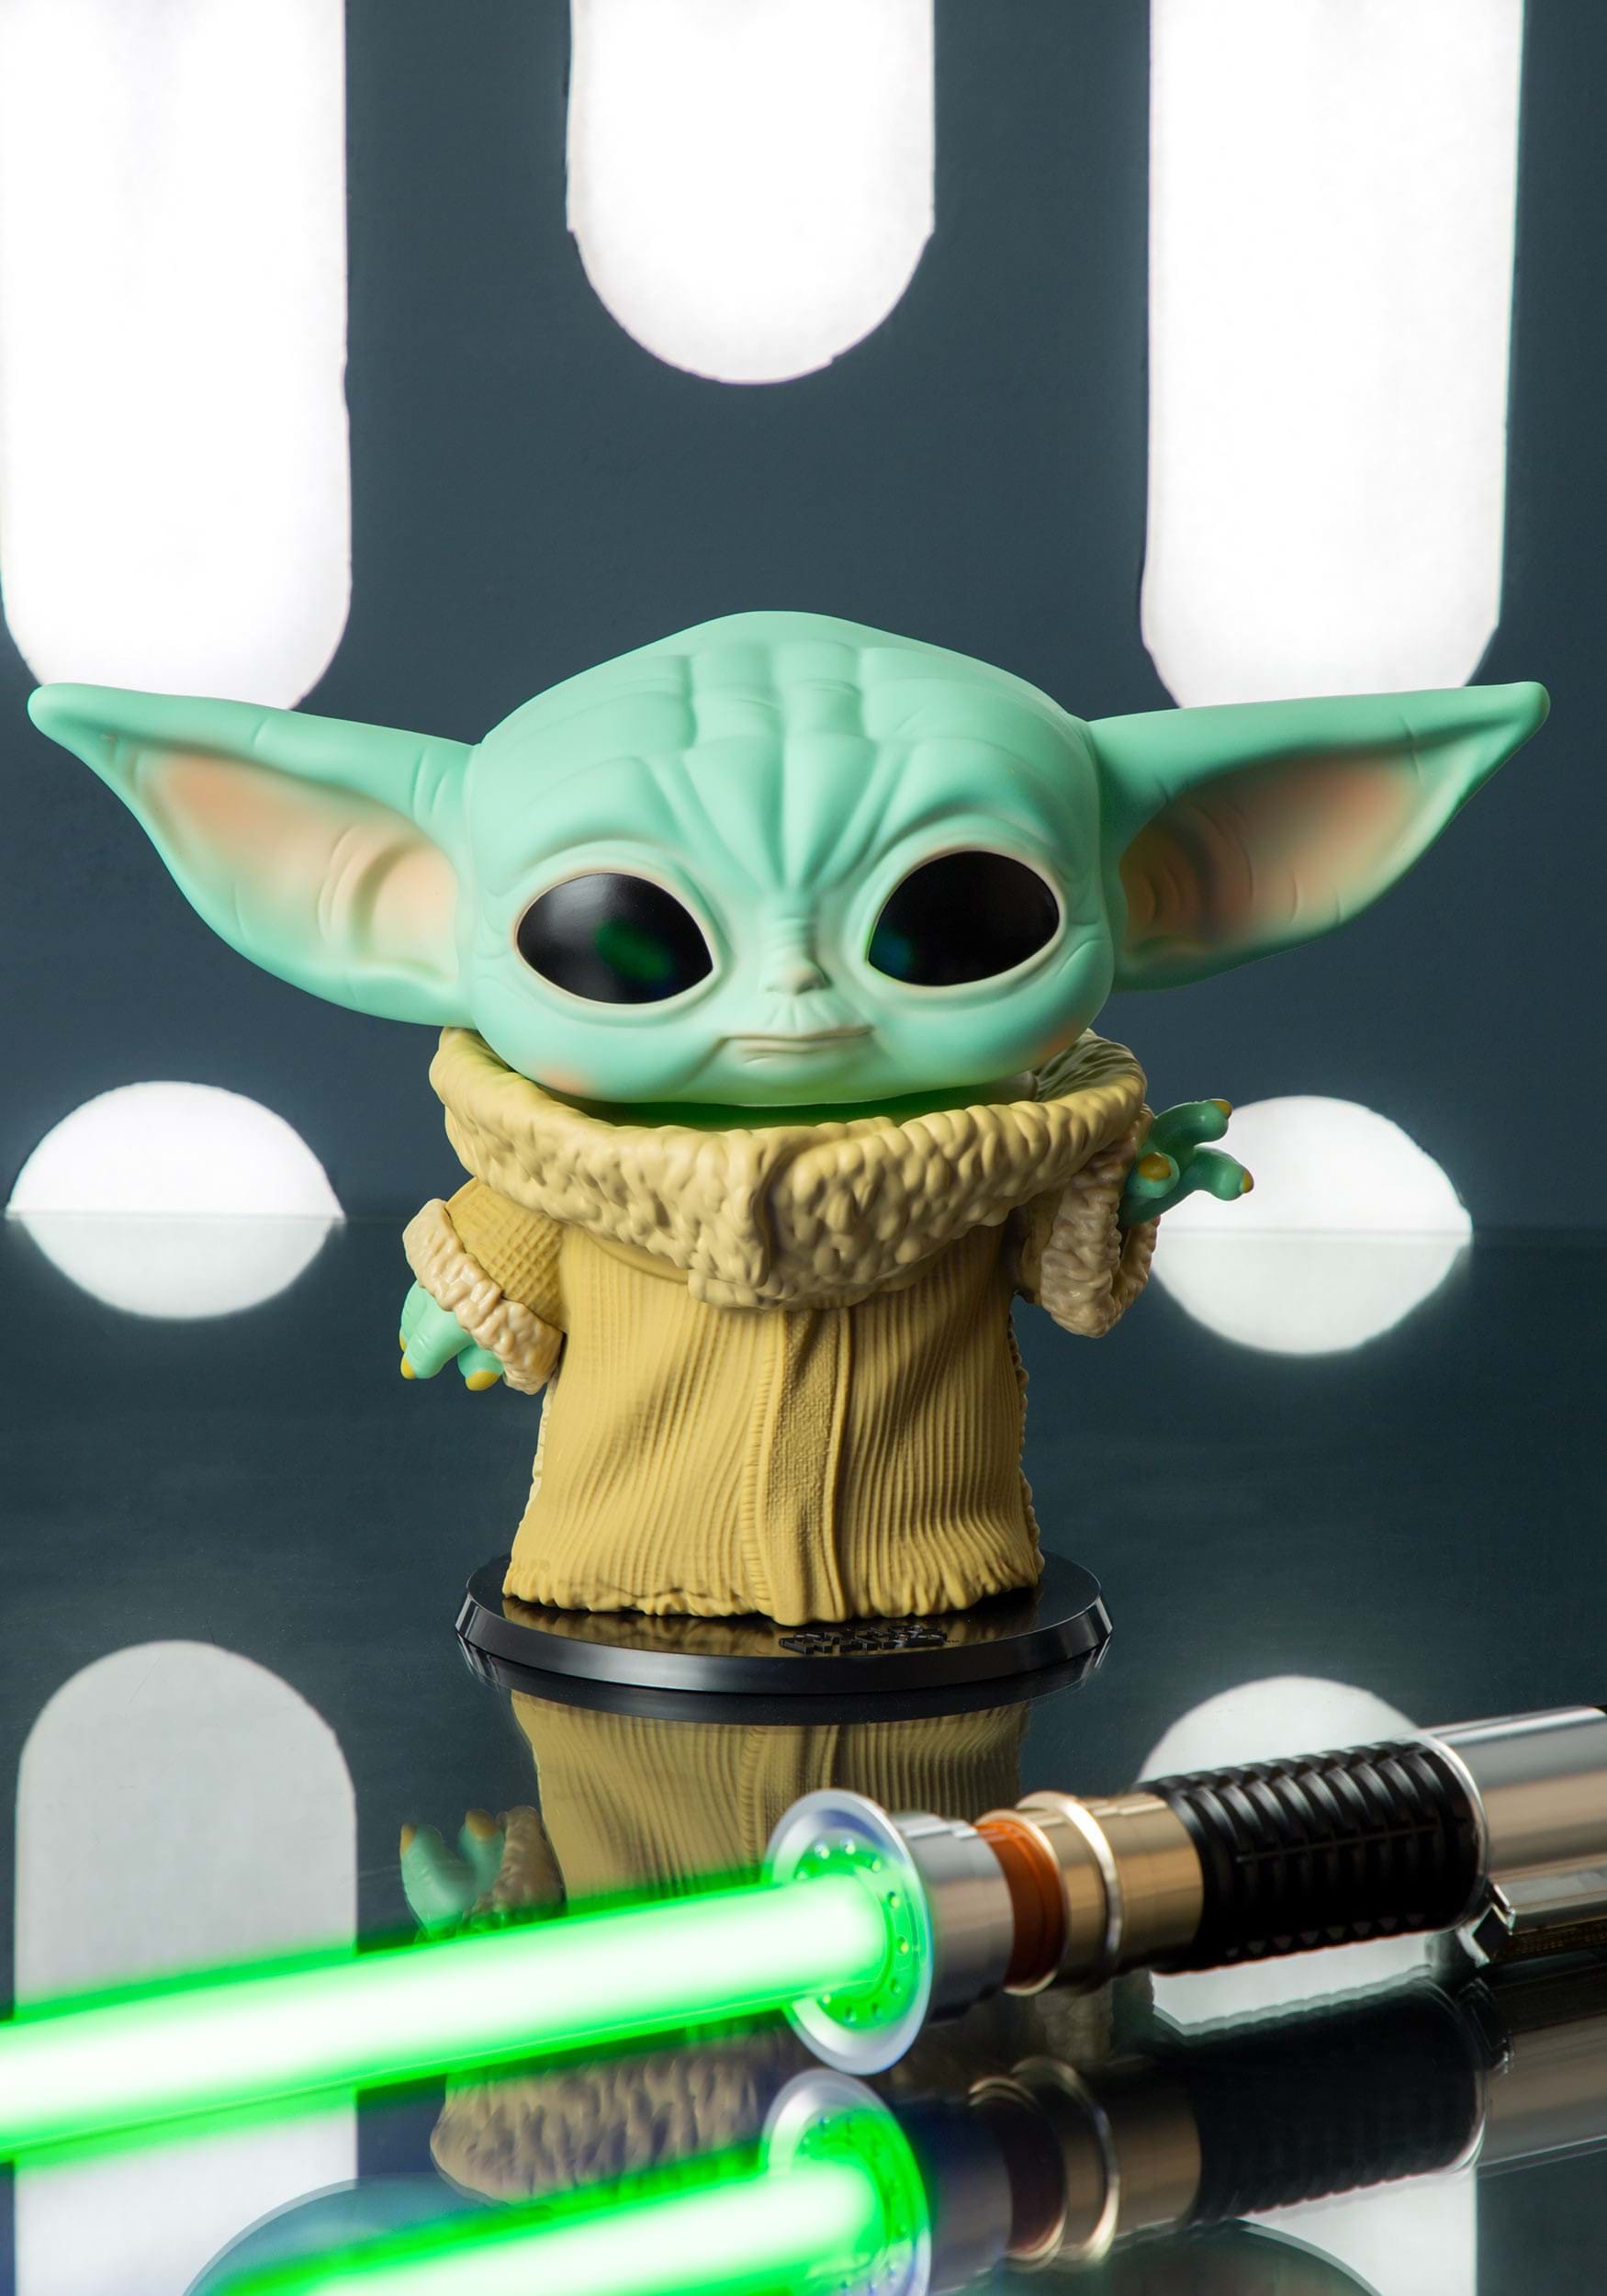 Soldes Mattel Disney Star Wars Mandalorian The Child - Baby Yoda